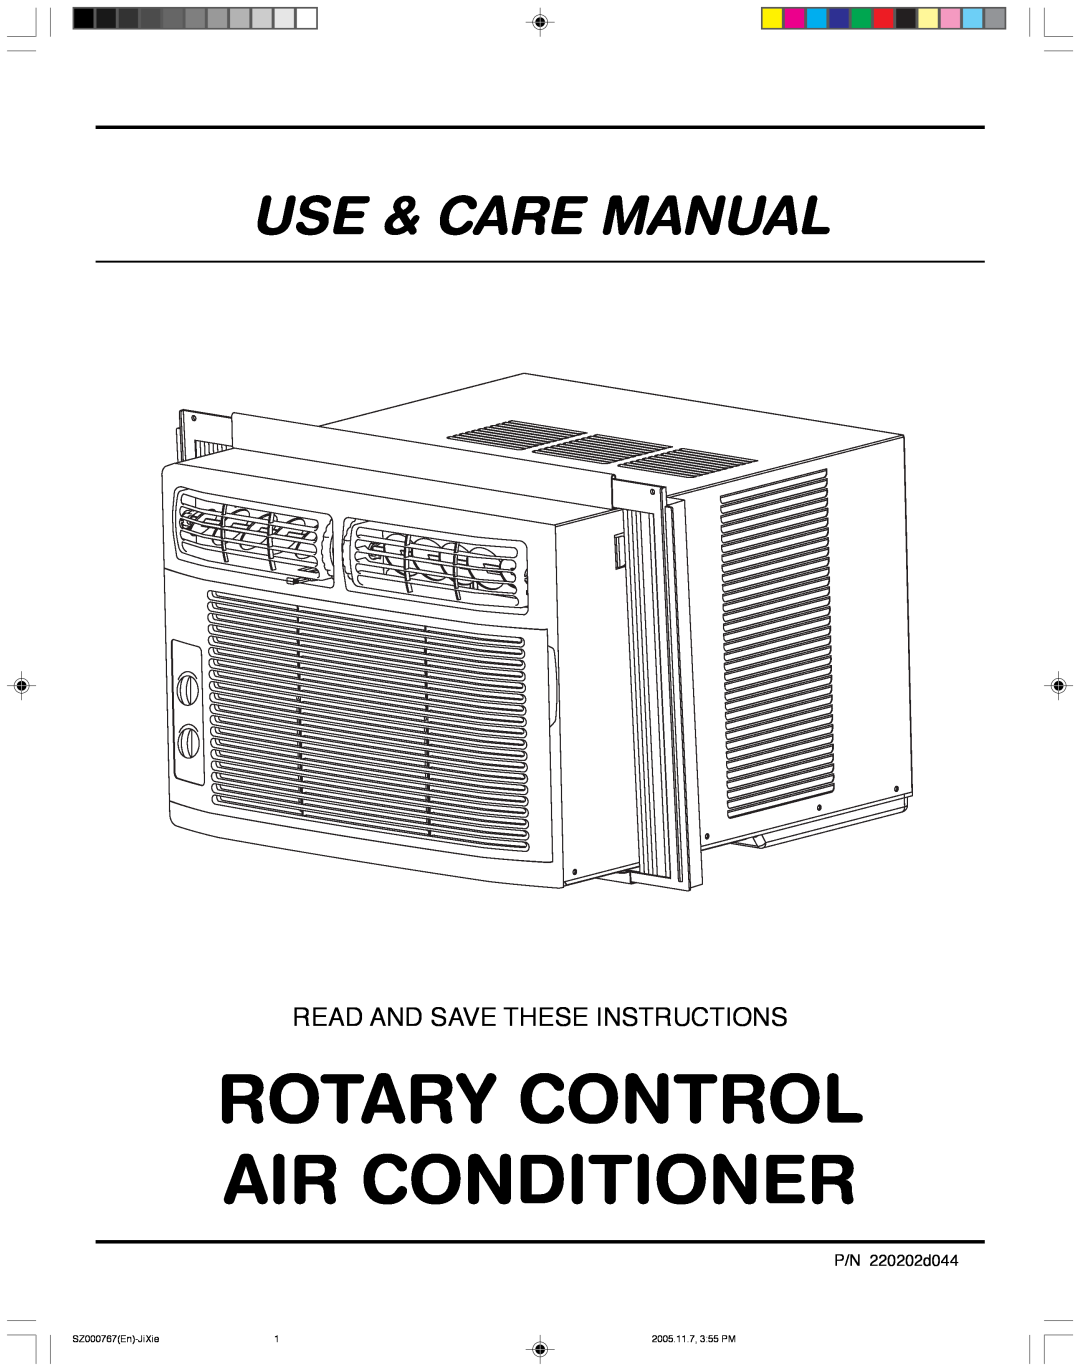 Frigidaire 220202D044 manual P/N 220202d044, Rotary Control Air Conditioner, Use & Care Manual, SZ000767En-JiXie 